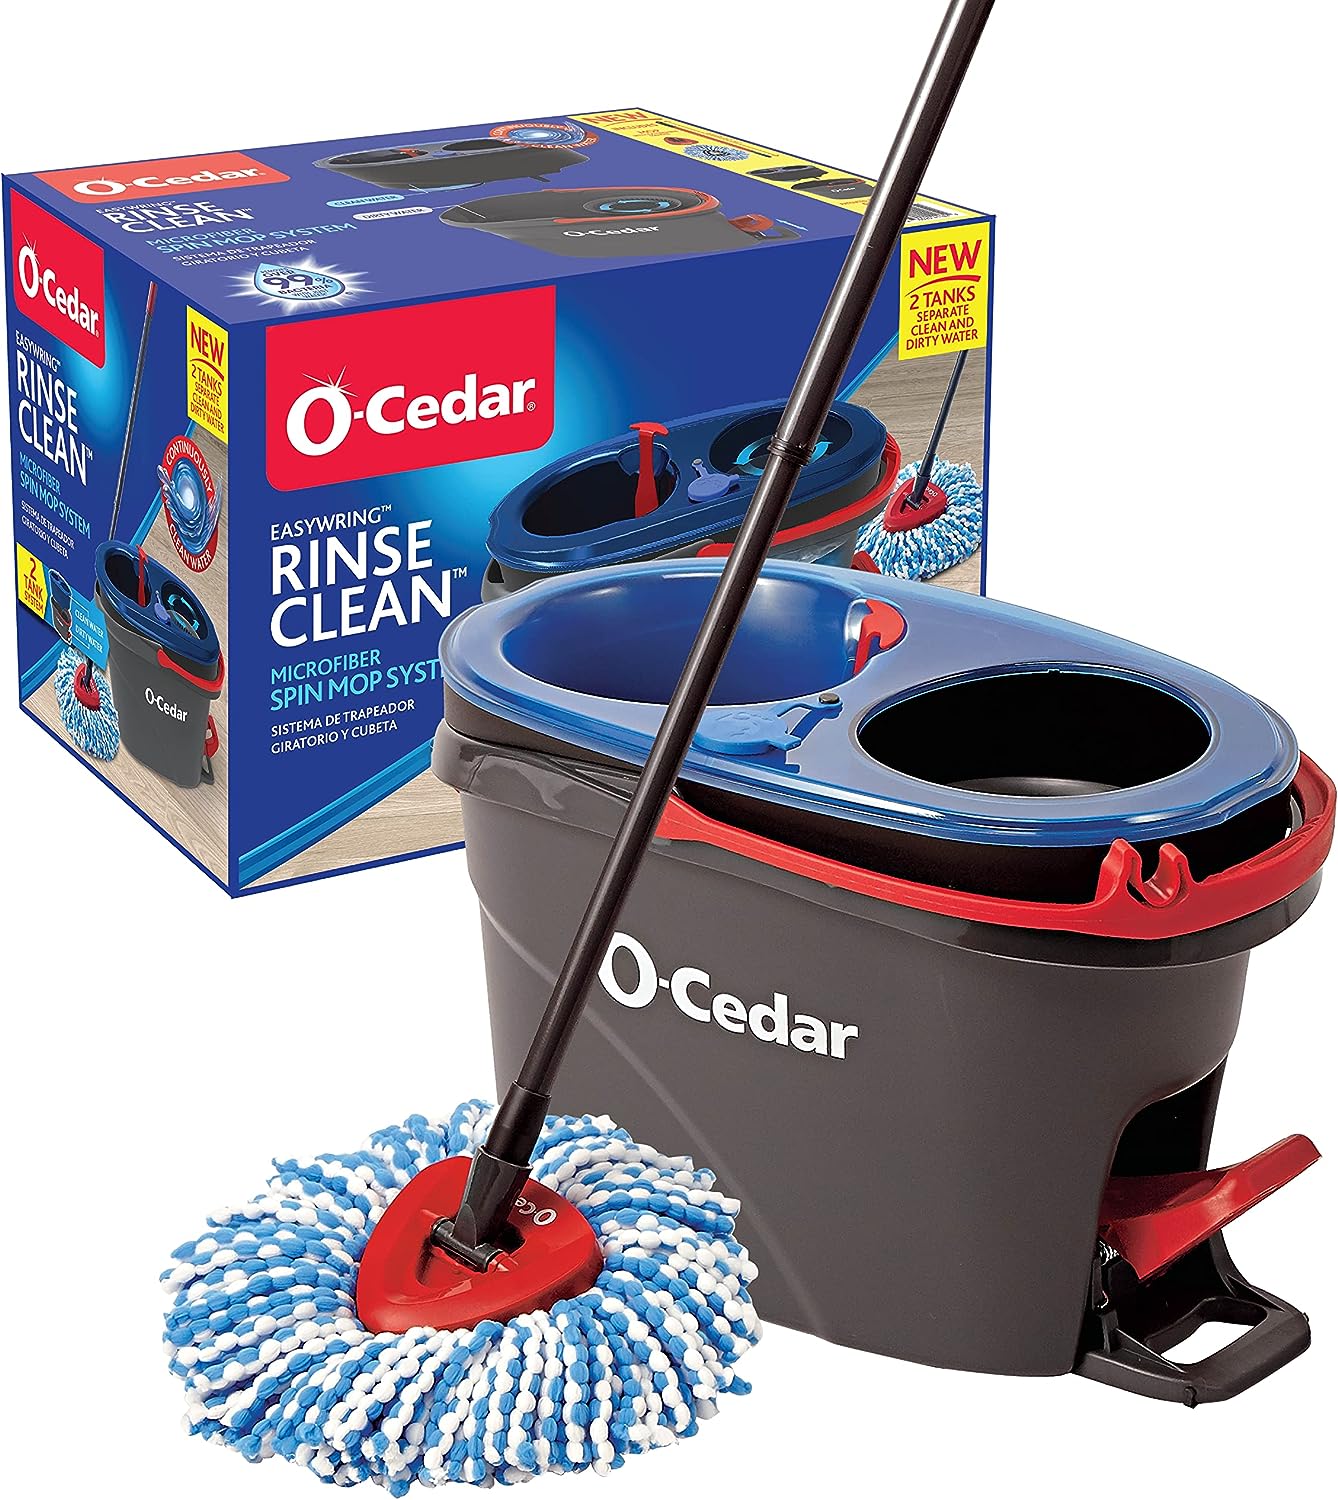 O-Cedar EasyWring RinseClean Microfiber Spin Mop & Bucket Floor